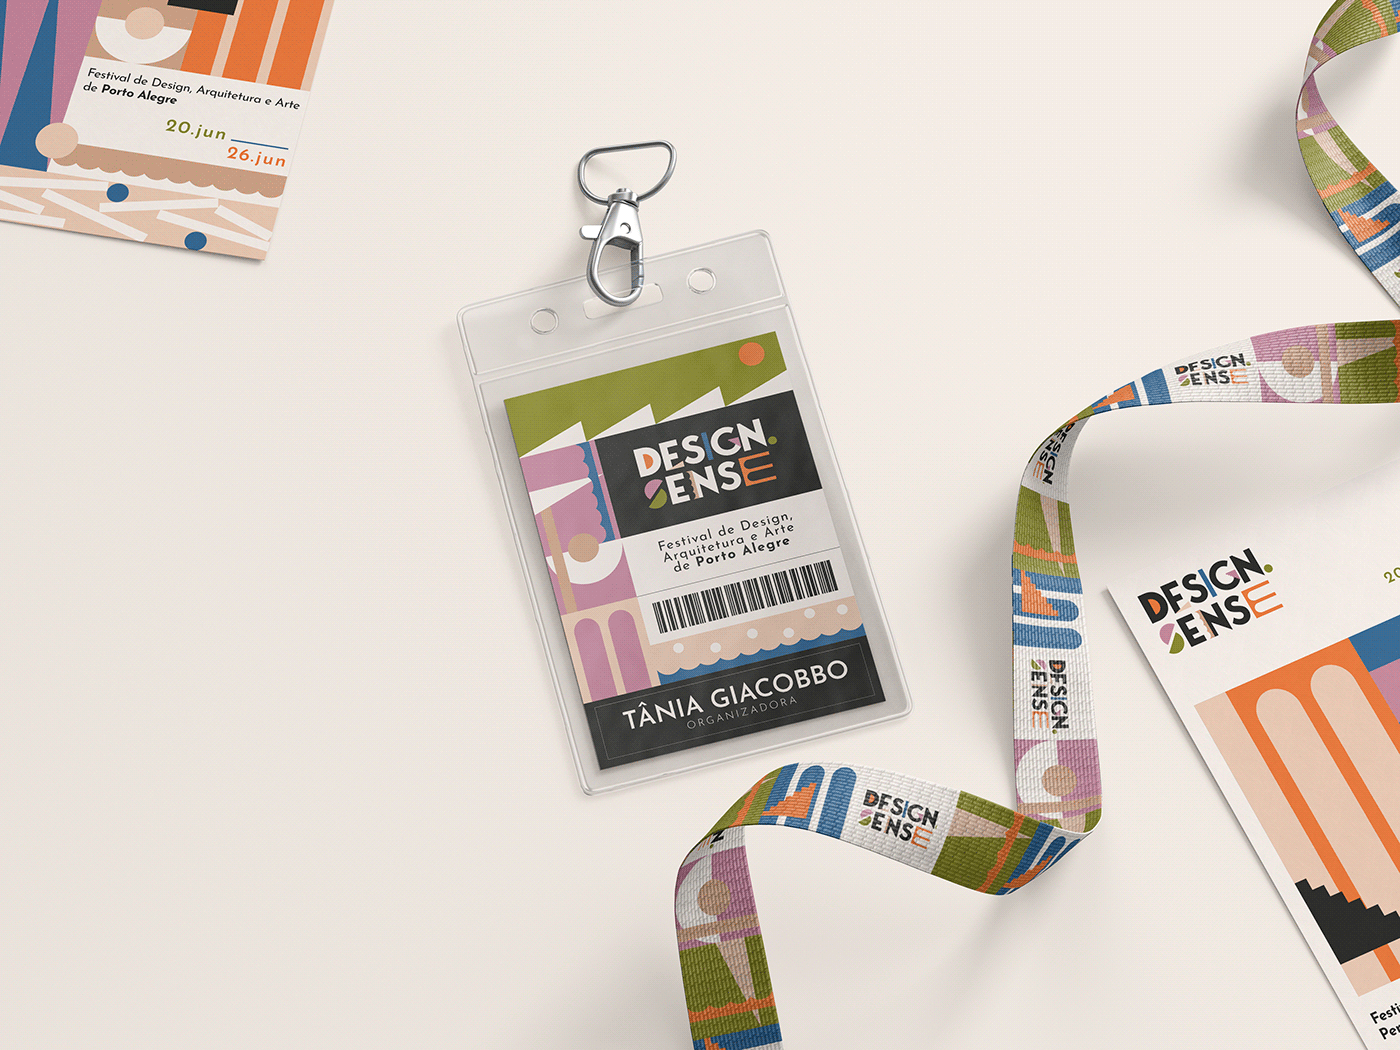 Animated Logo architeture art badge banners exposition festival mock ups posters brand identity festival